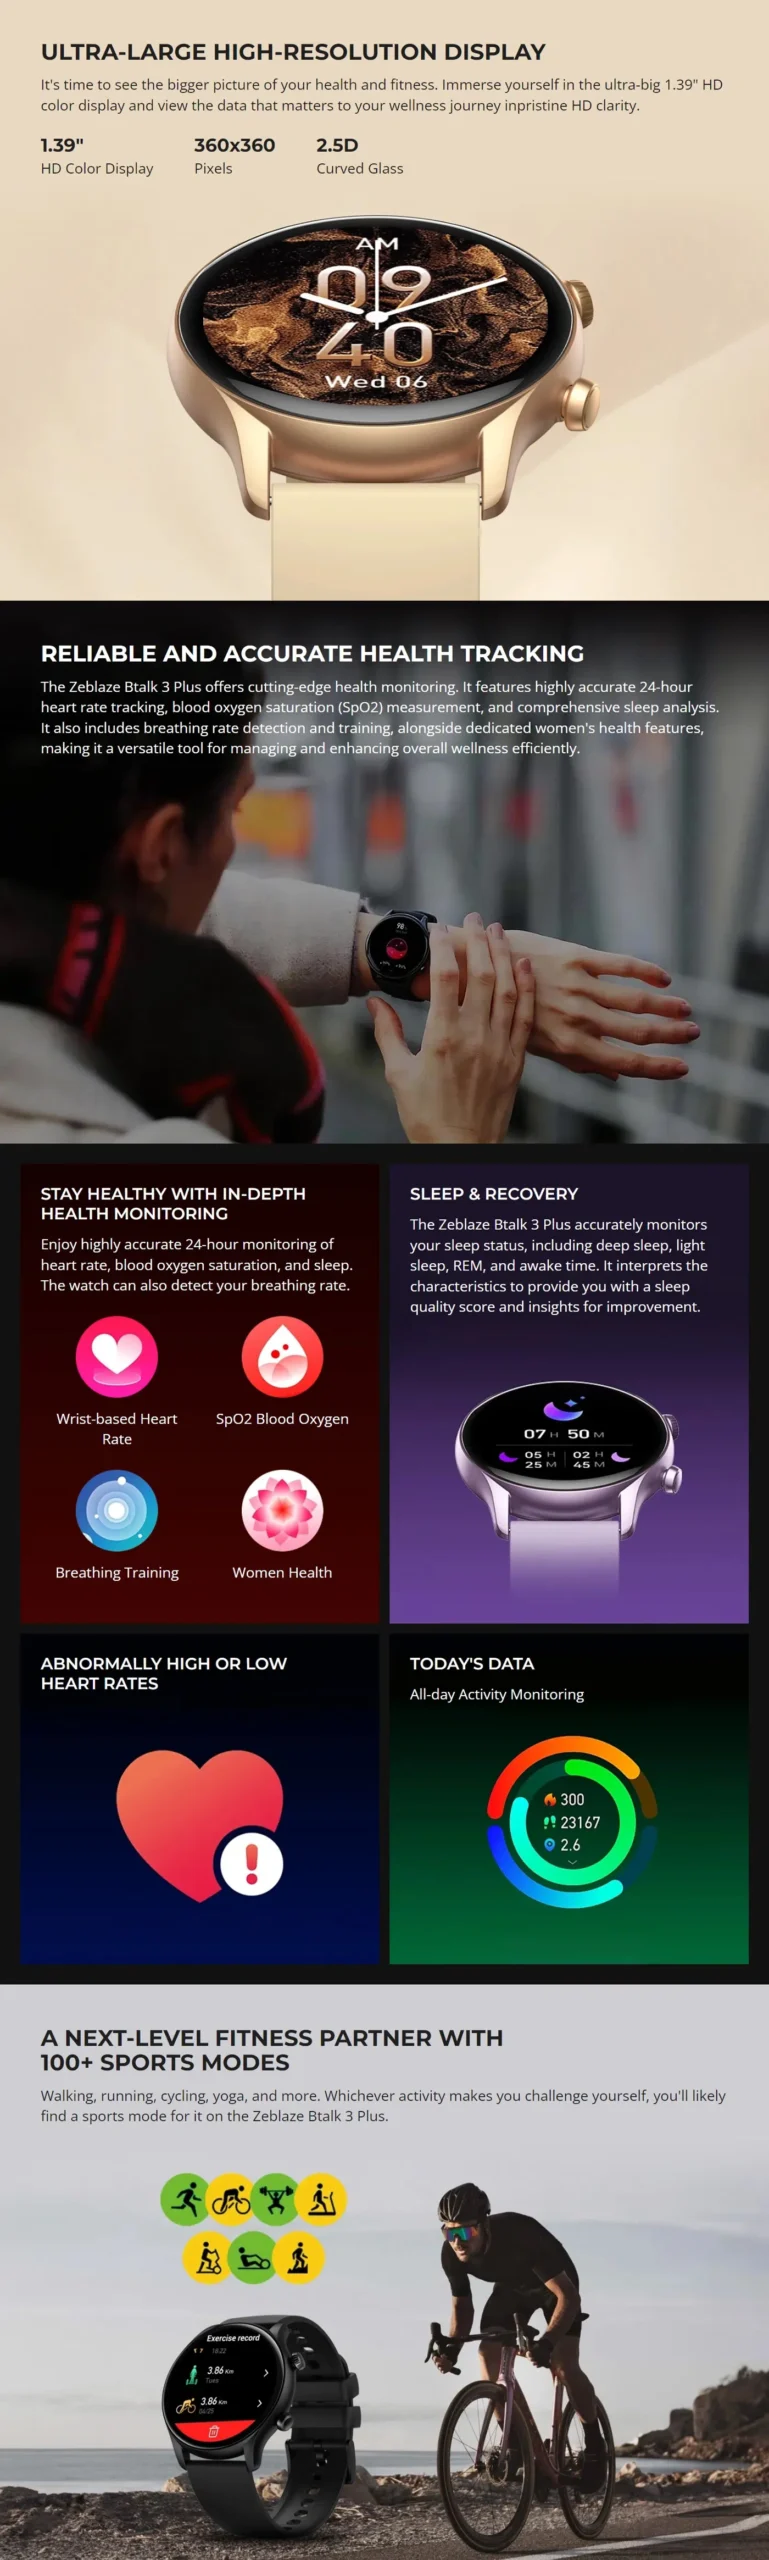 Fitness tracking on advanced wearable device Zeblaze Btalk 3 Plus